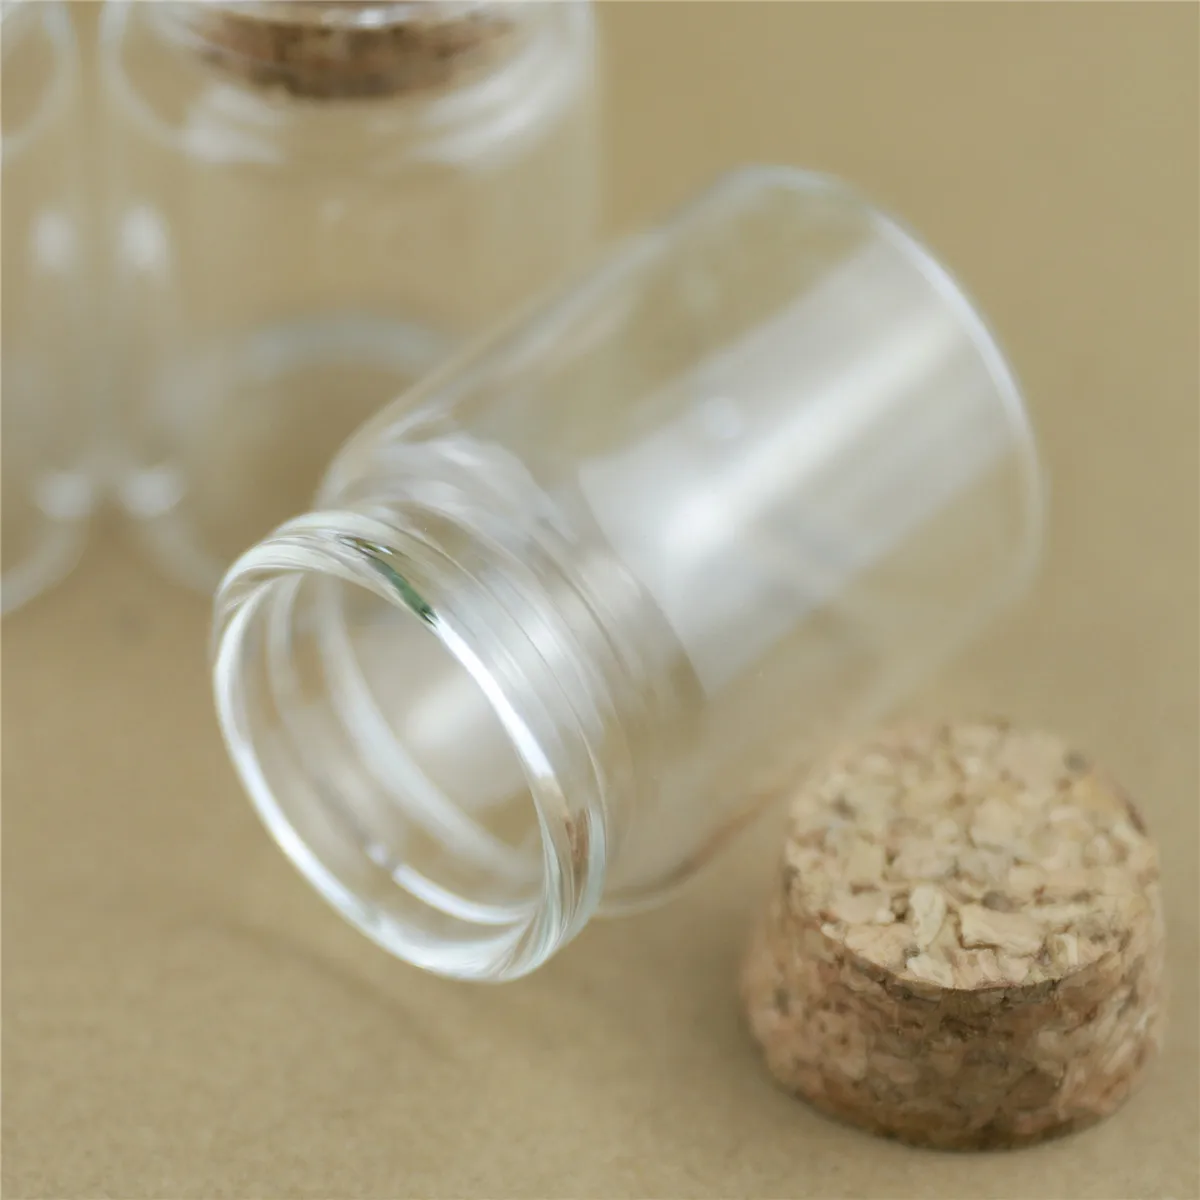 https://ae01.alicdn.com/kf/H60cce551e6c94110b5d0333beea2e5993/48-Pieces-37-50mm-30ml-Glass-Jars-Test-Tube-Spice-Storage-Jars-Corks-spicy-Glass-Bottle.jpg